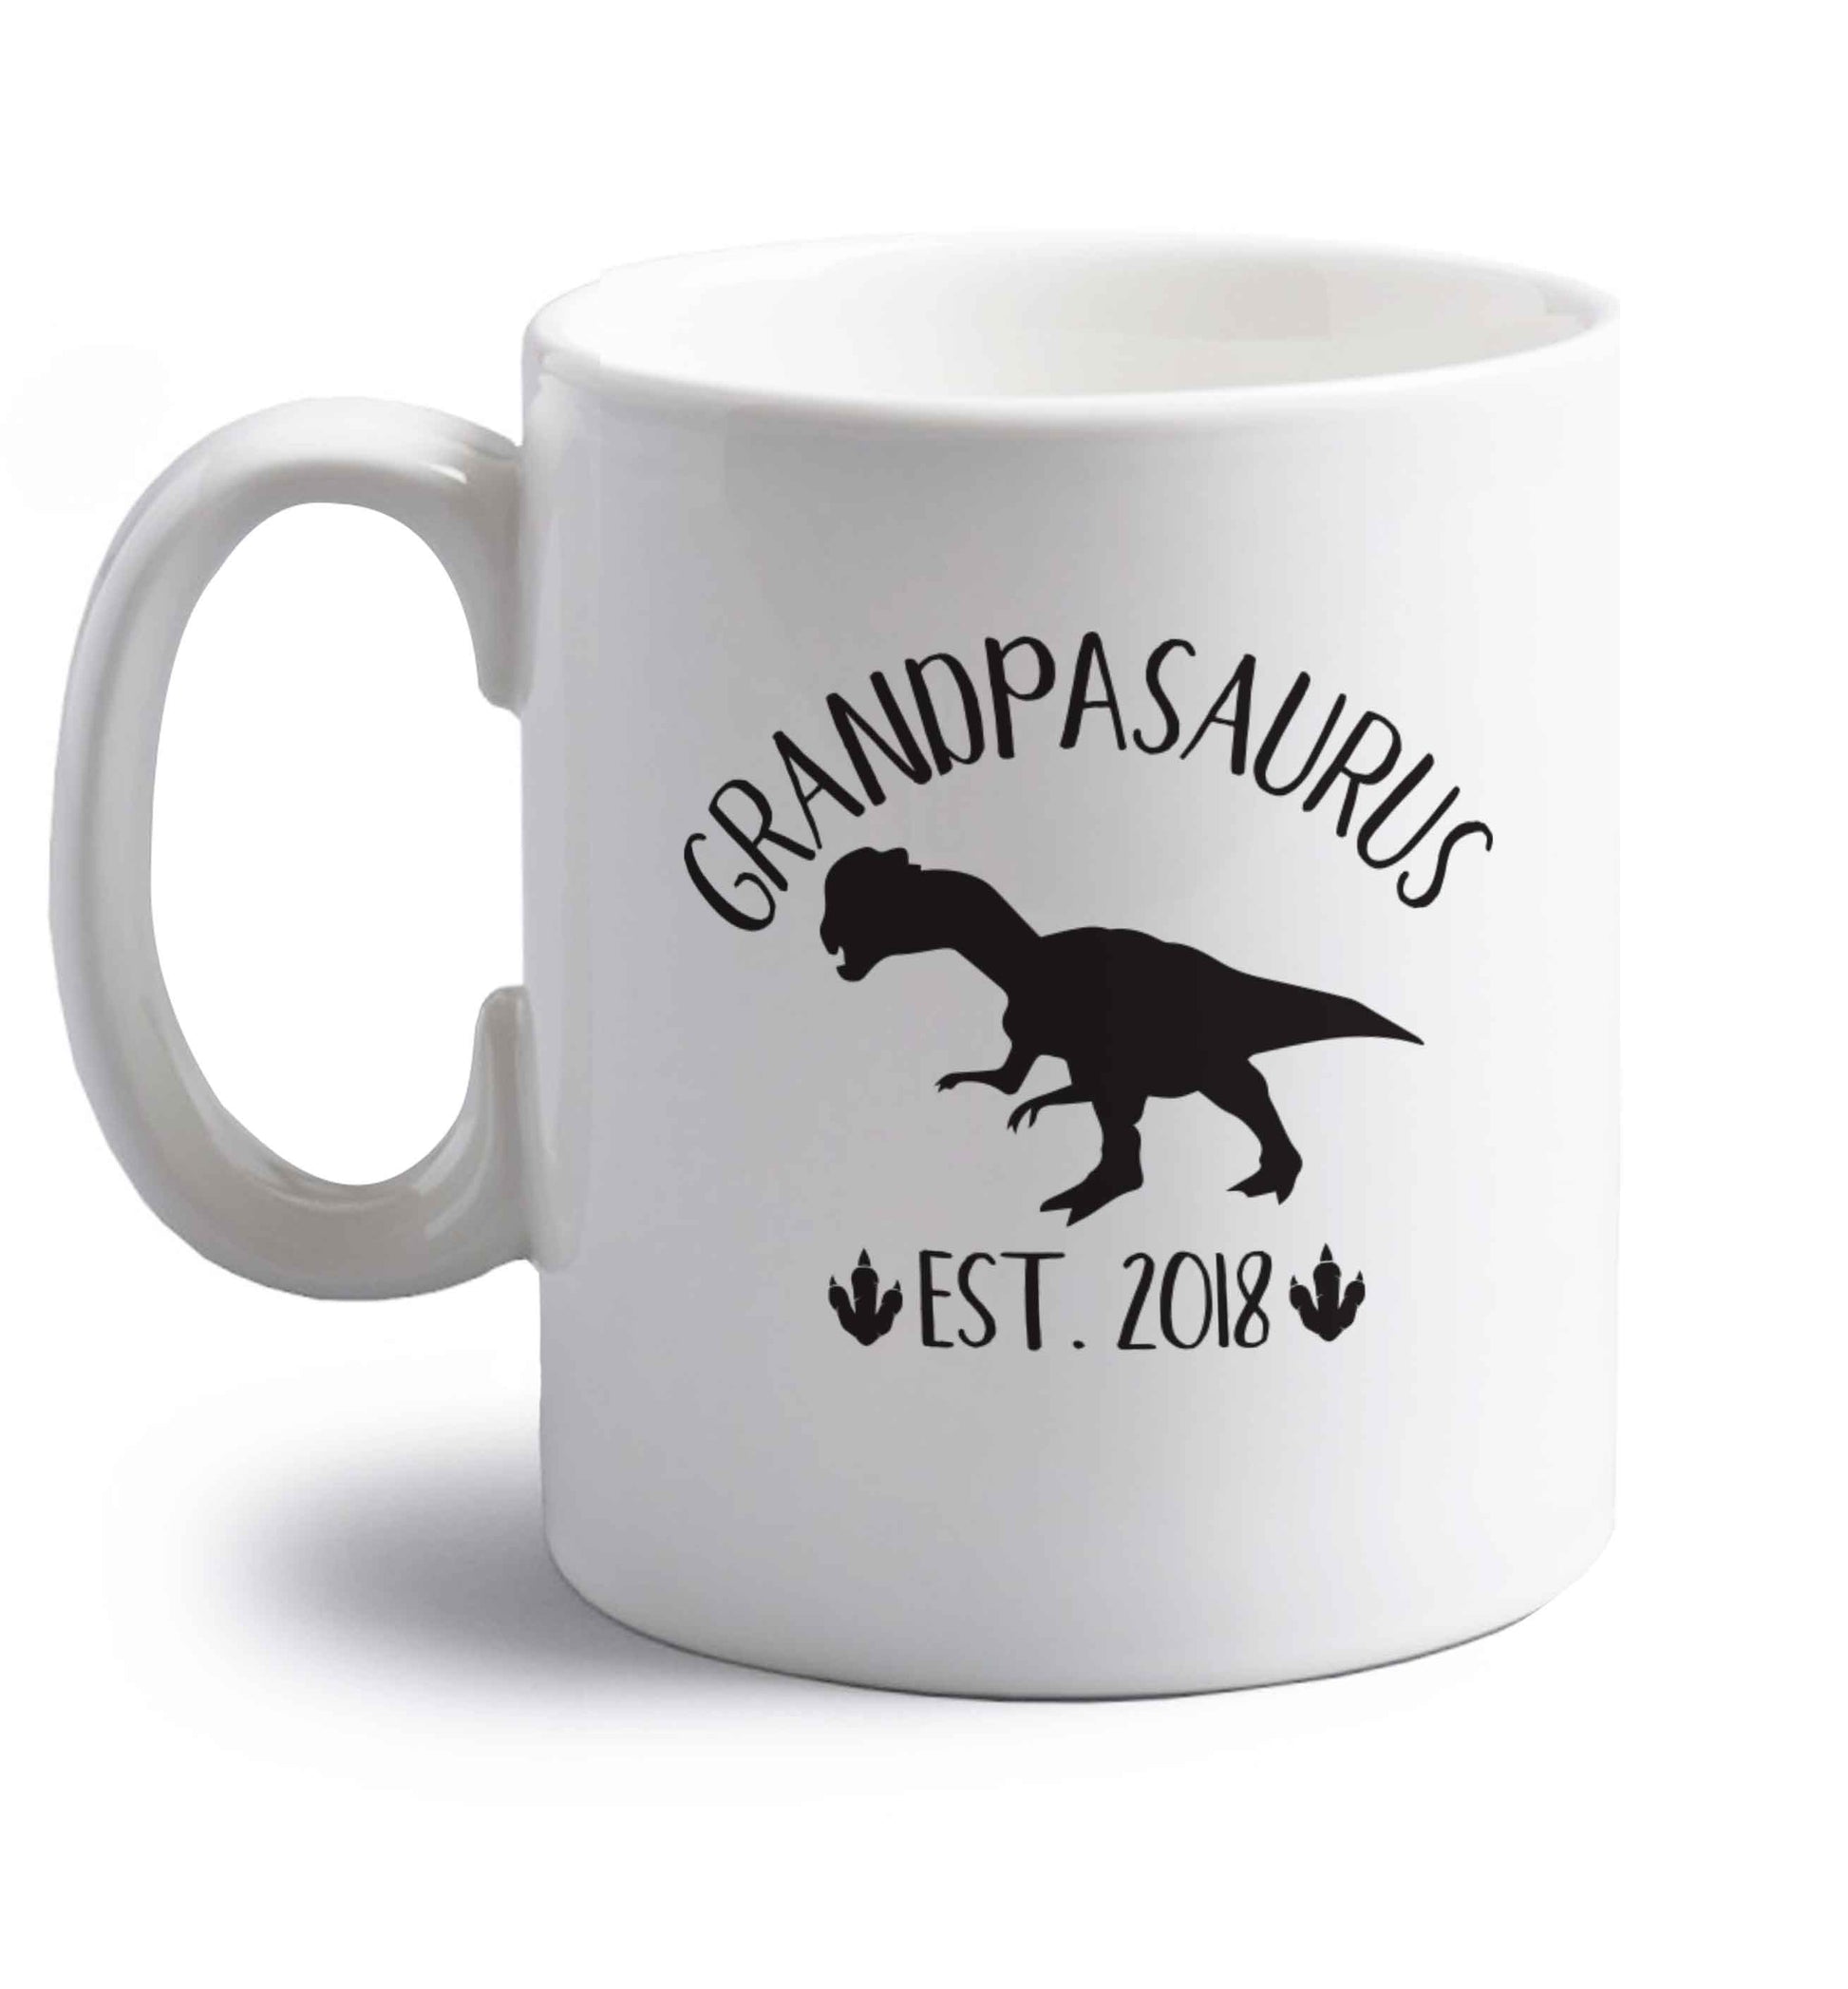 Personalised grandpasaurus since (custom date) right handed white ceramic mug 